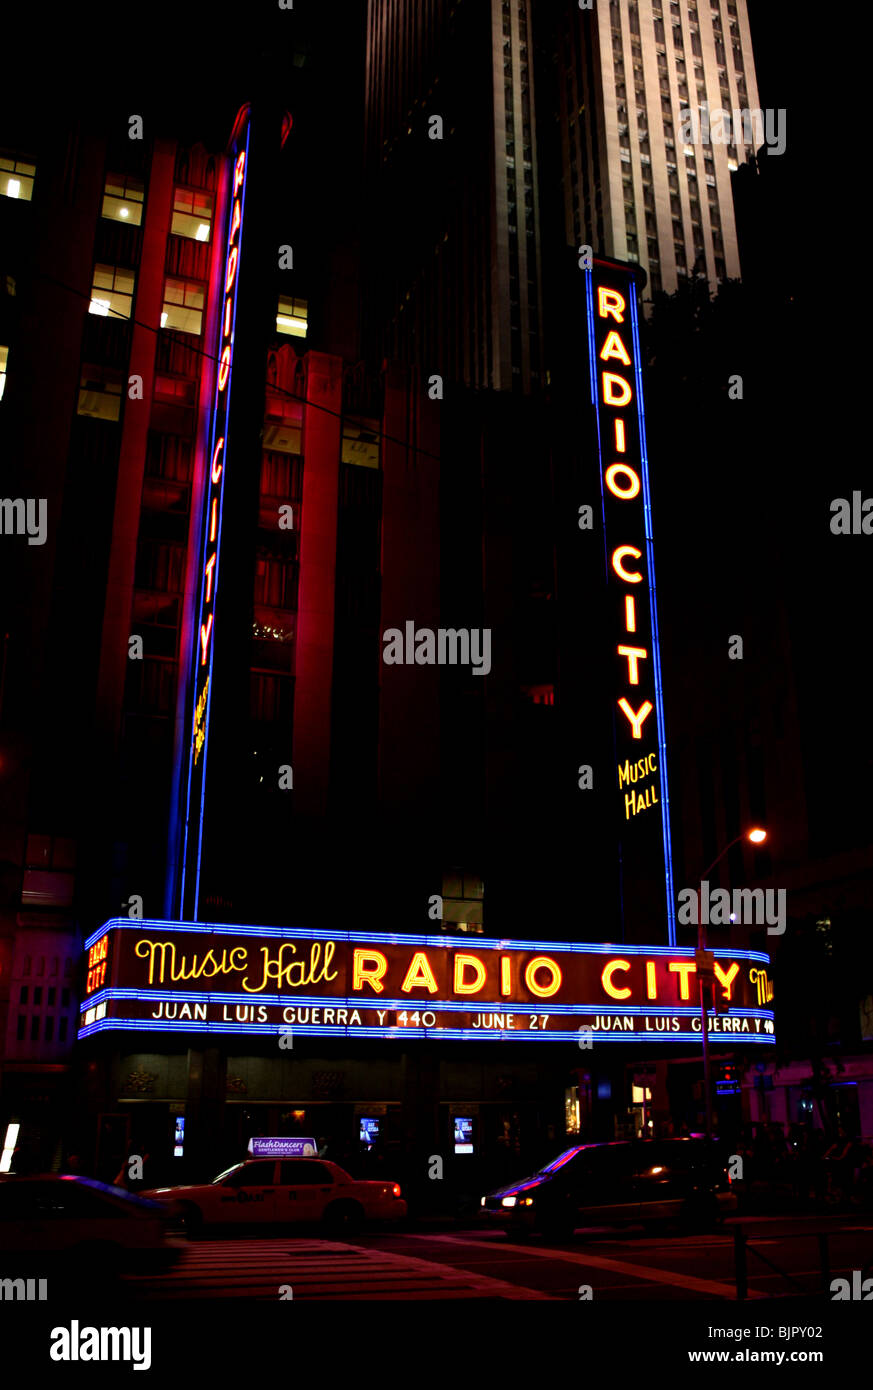 Radio City Music Hall night shot, Times Square. June 2009. Stock Photo